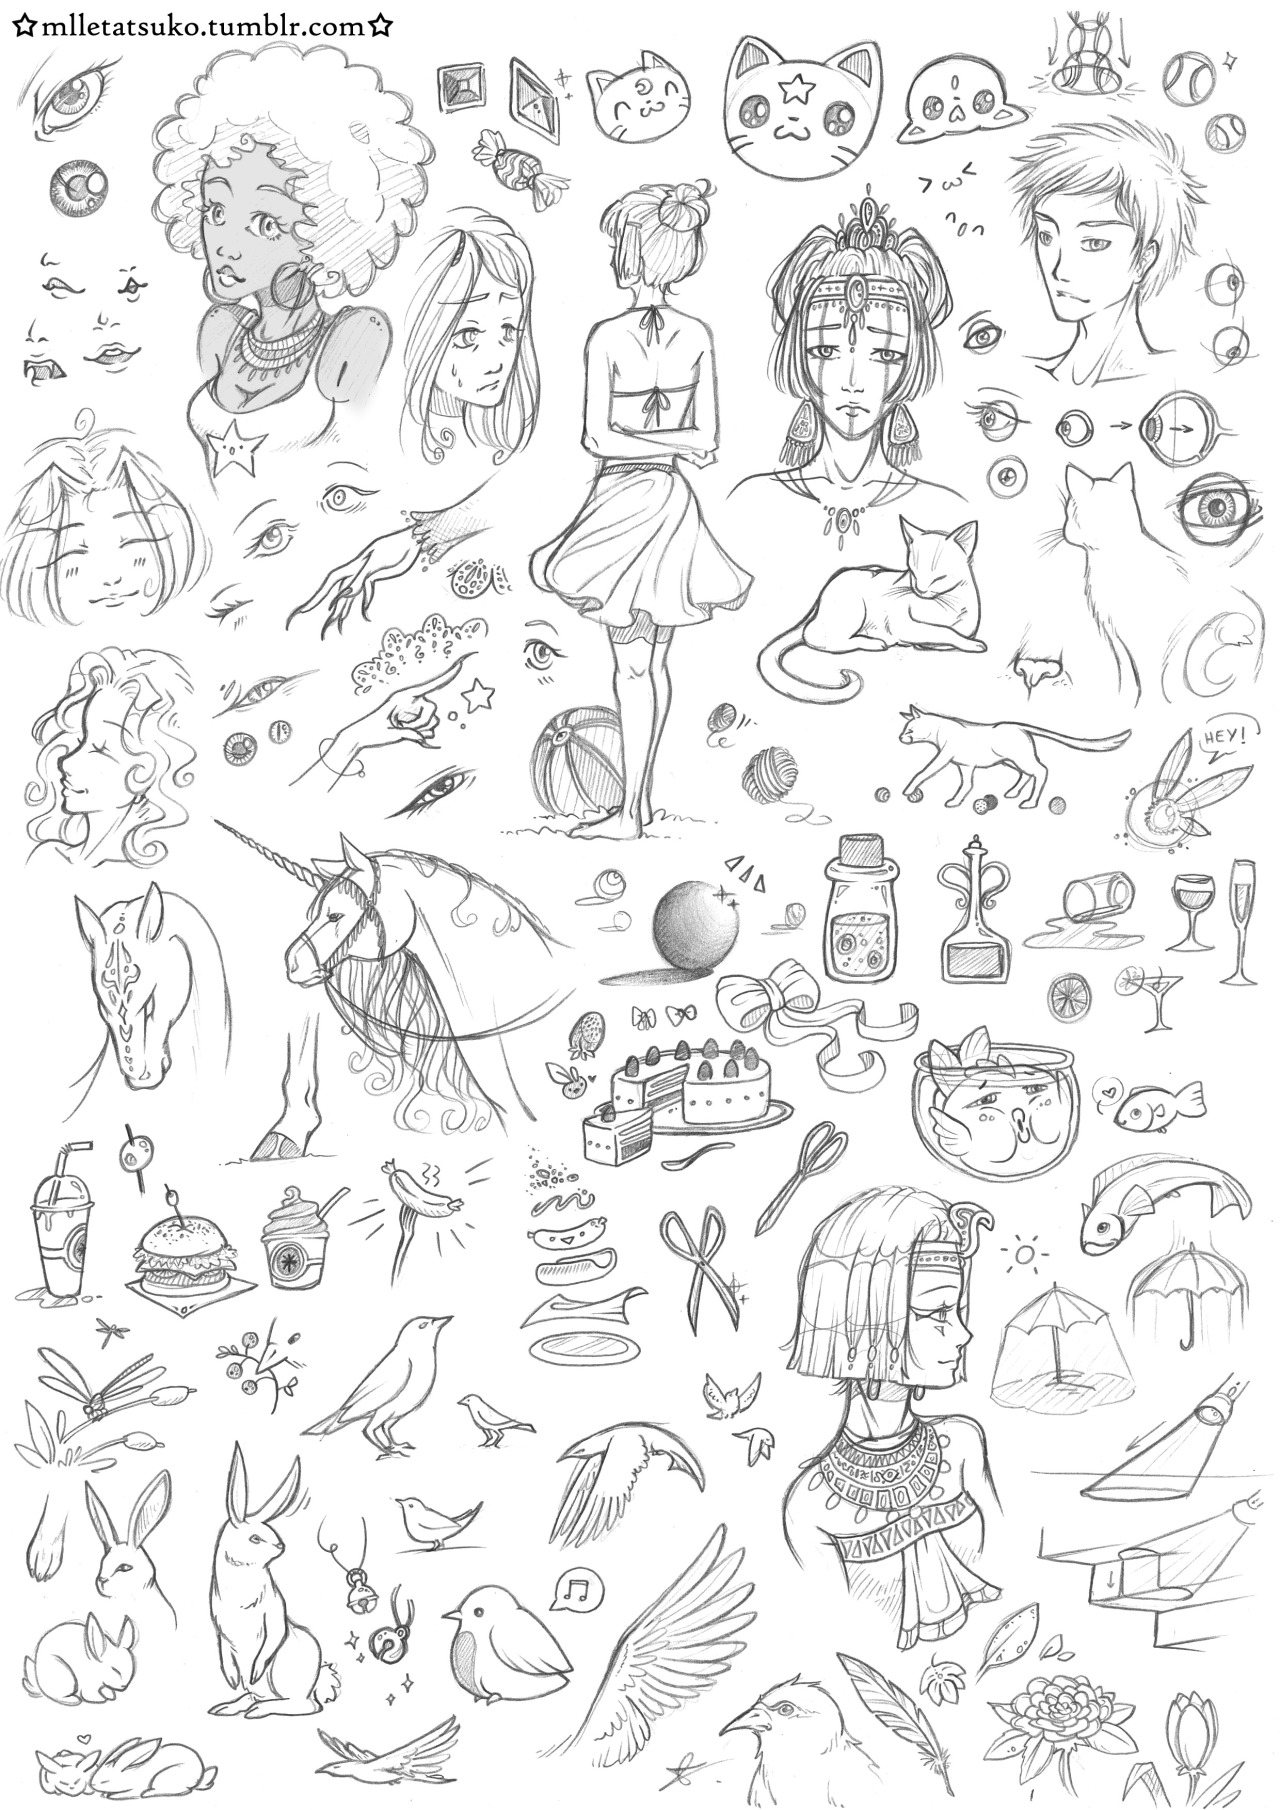 Lot of random sketches xD